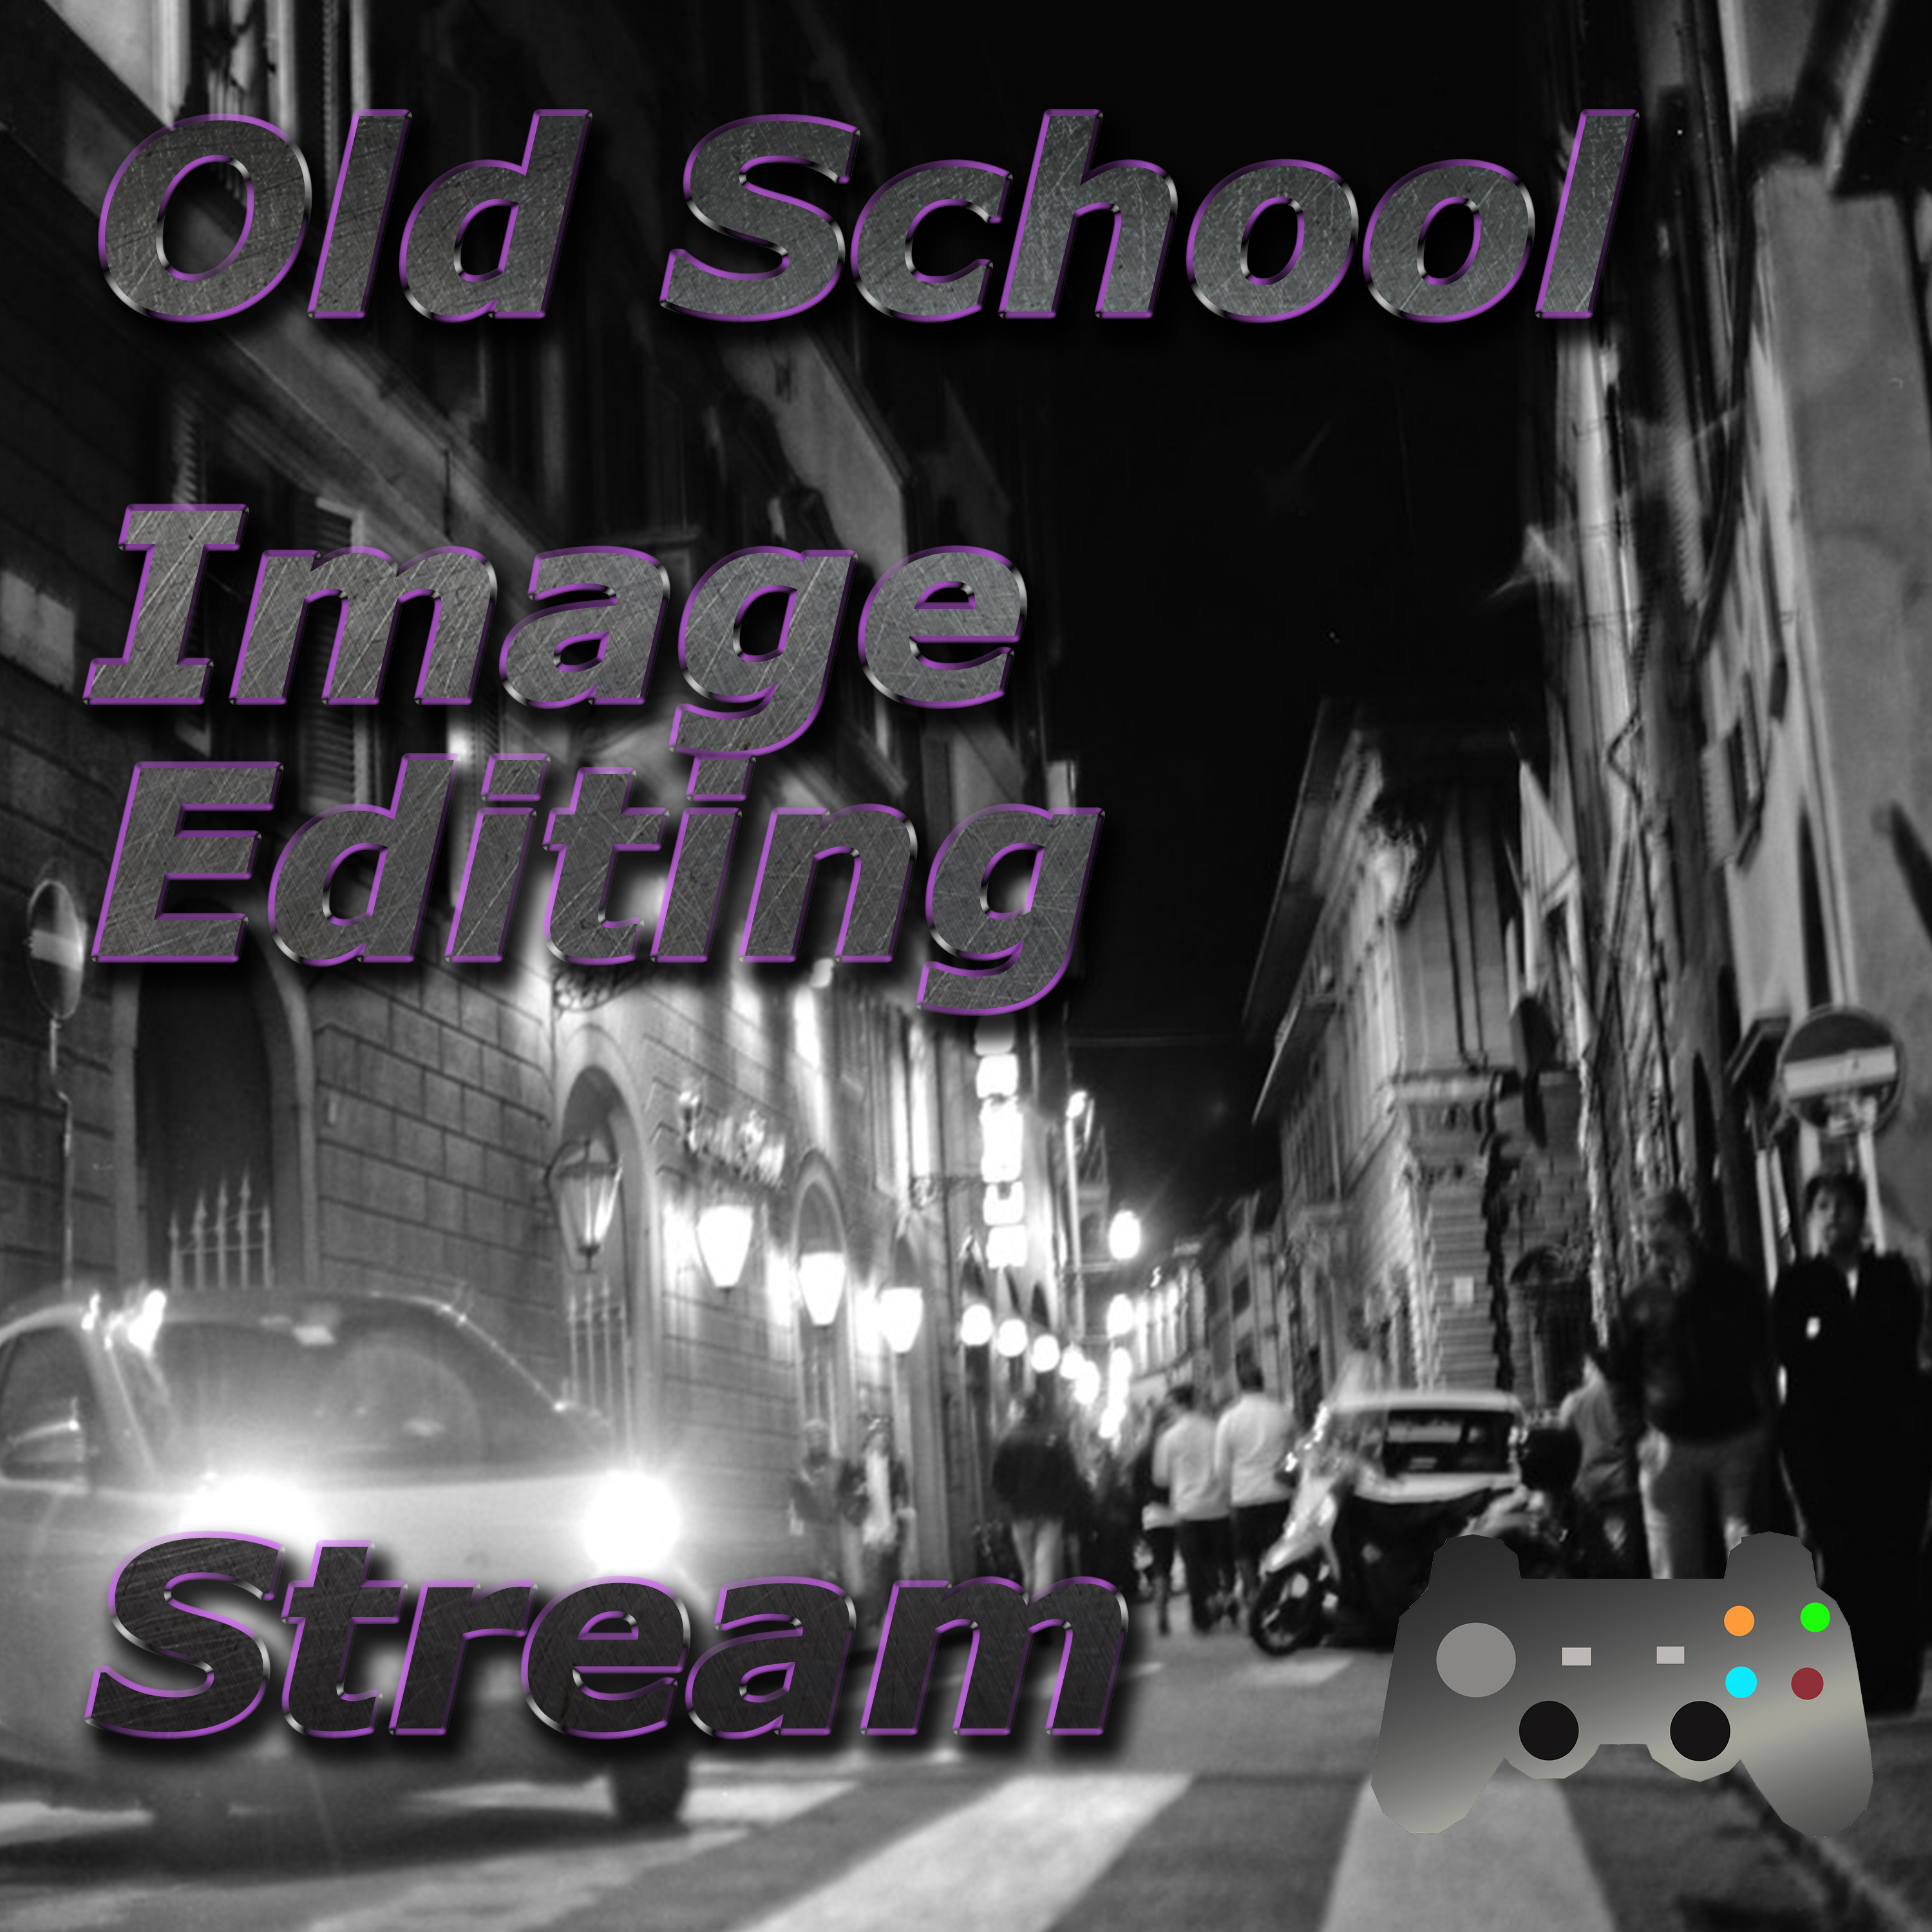 10 Old School Image Editing Stream